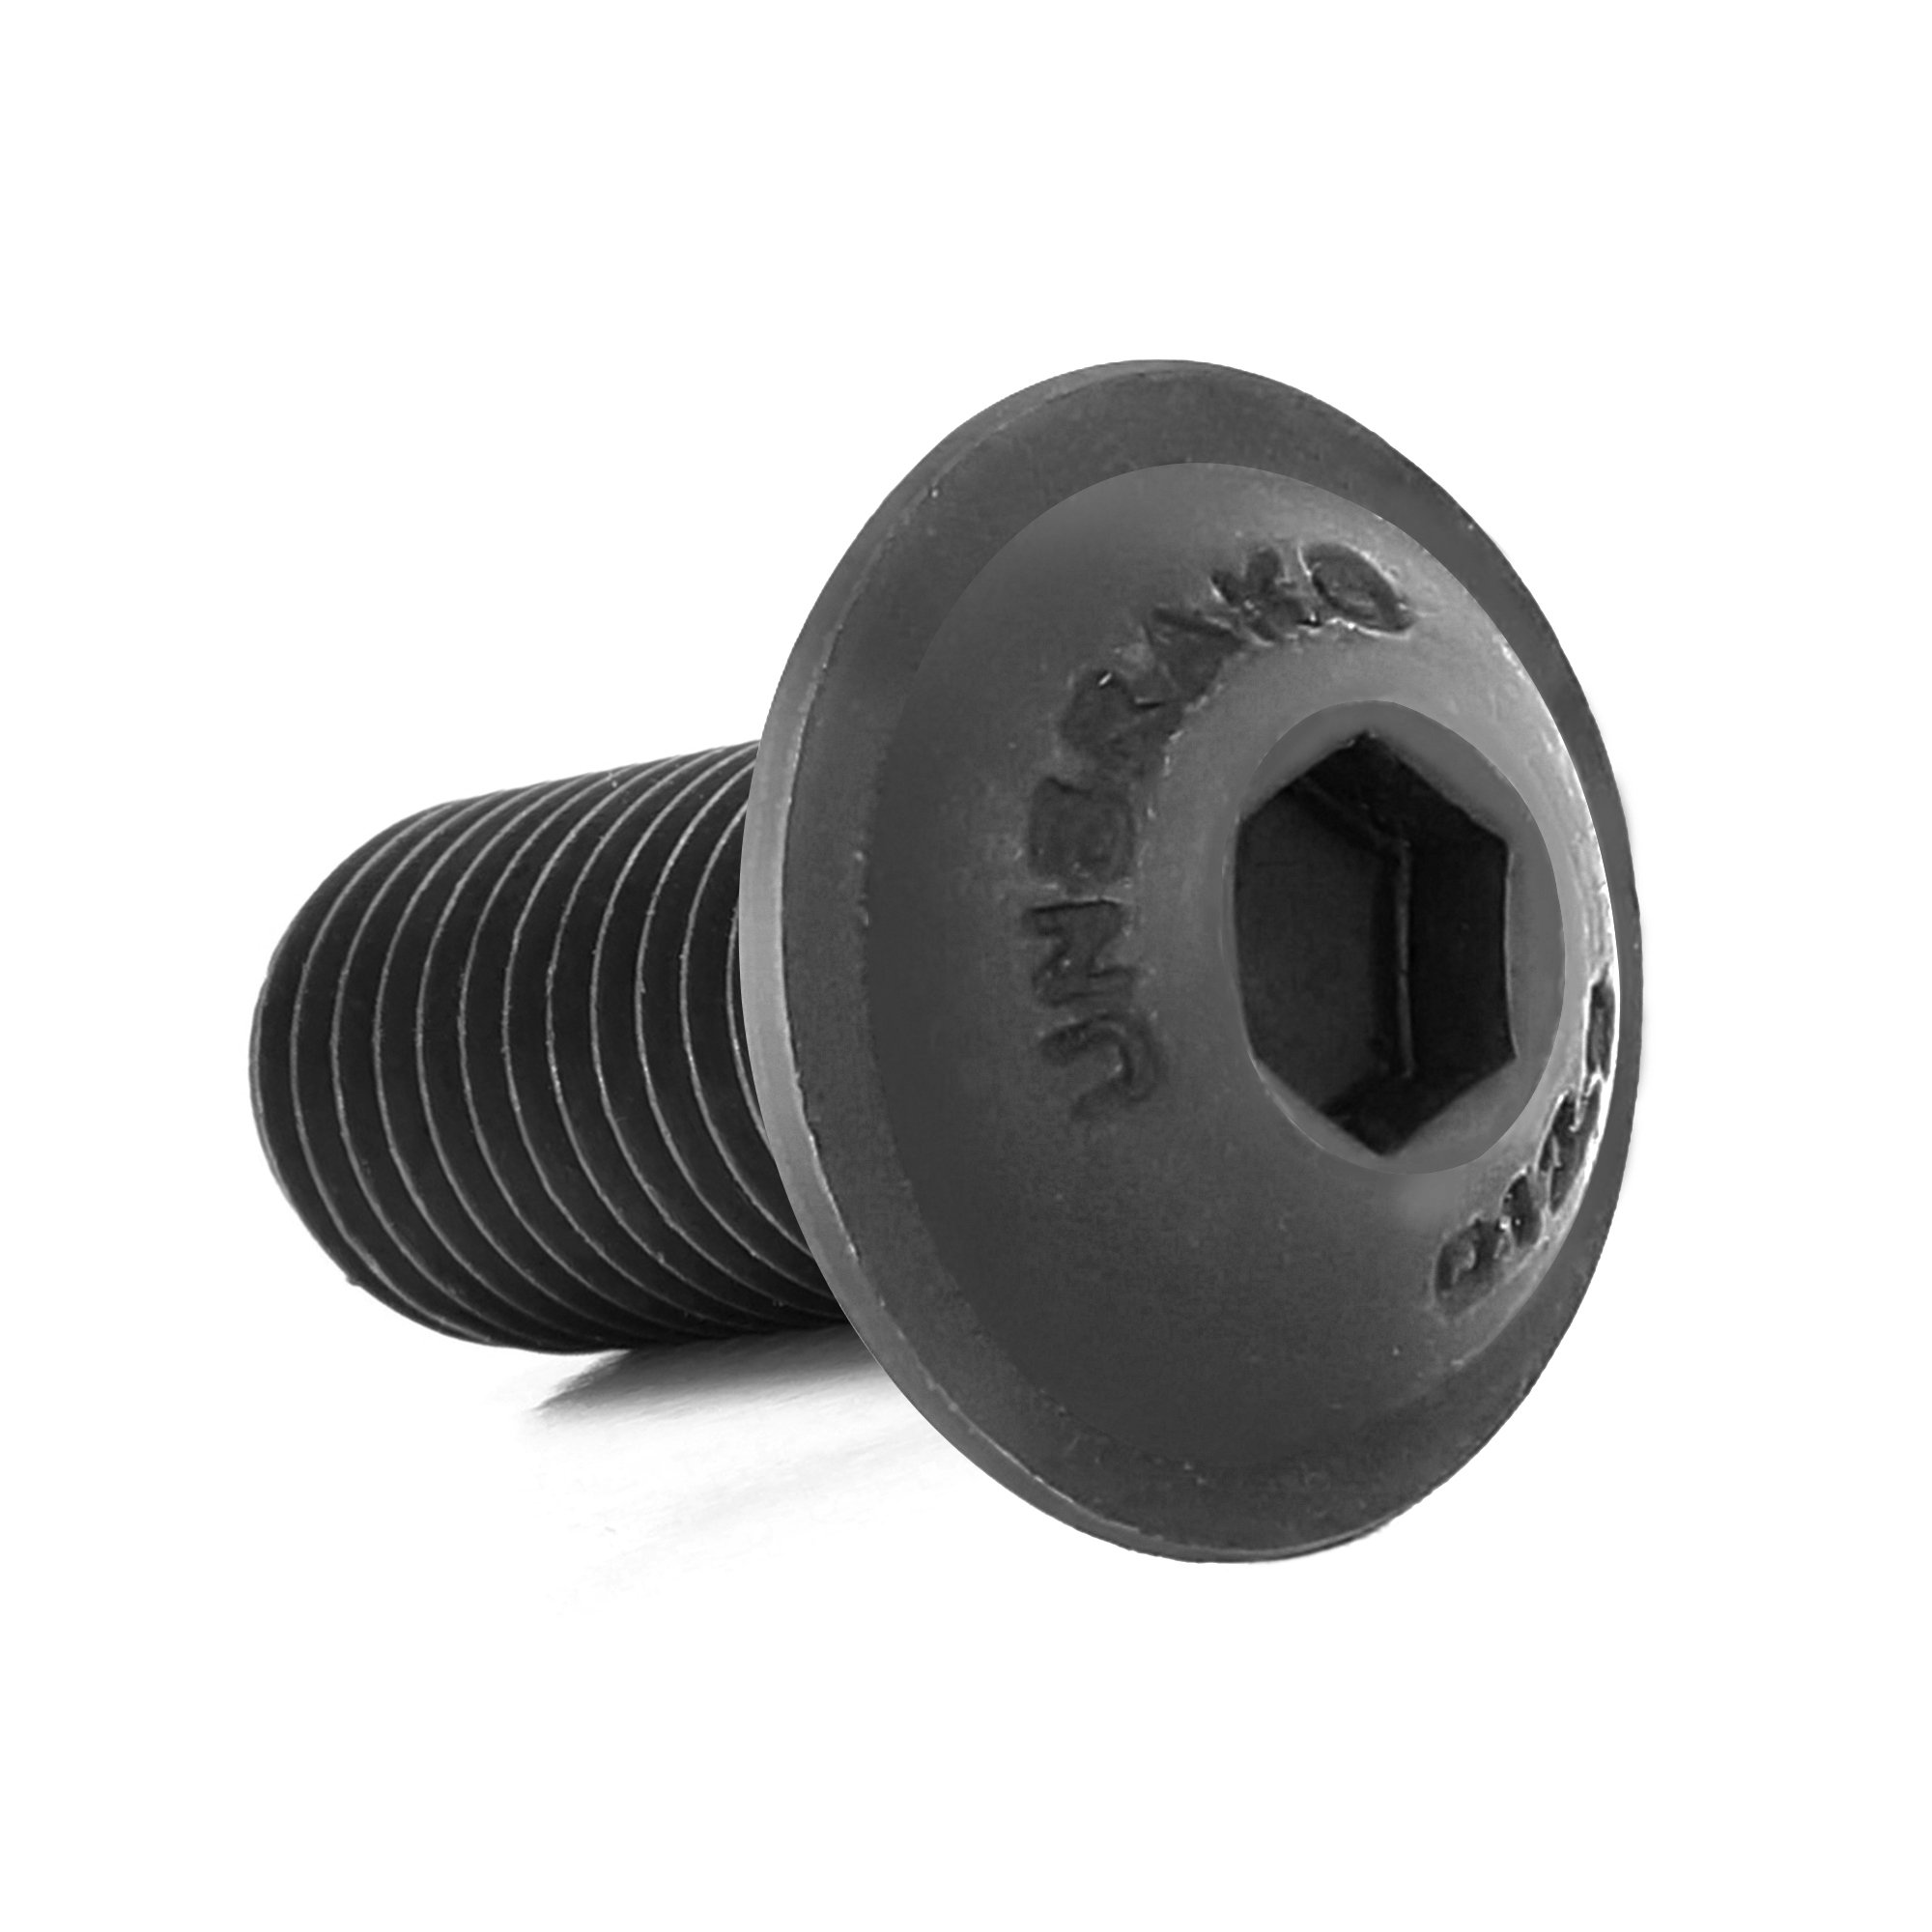 5/16-18x1 ASME B18.3 Alloy Steel Flange Button Hd Socket Cap Screw Full Thrd Black Oxide (Unbrako)